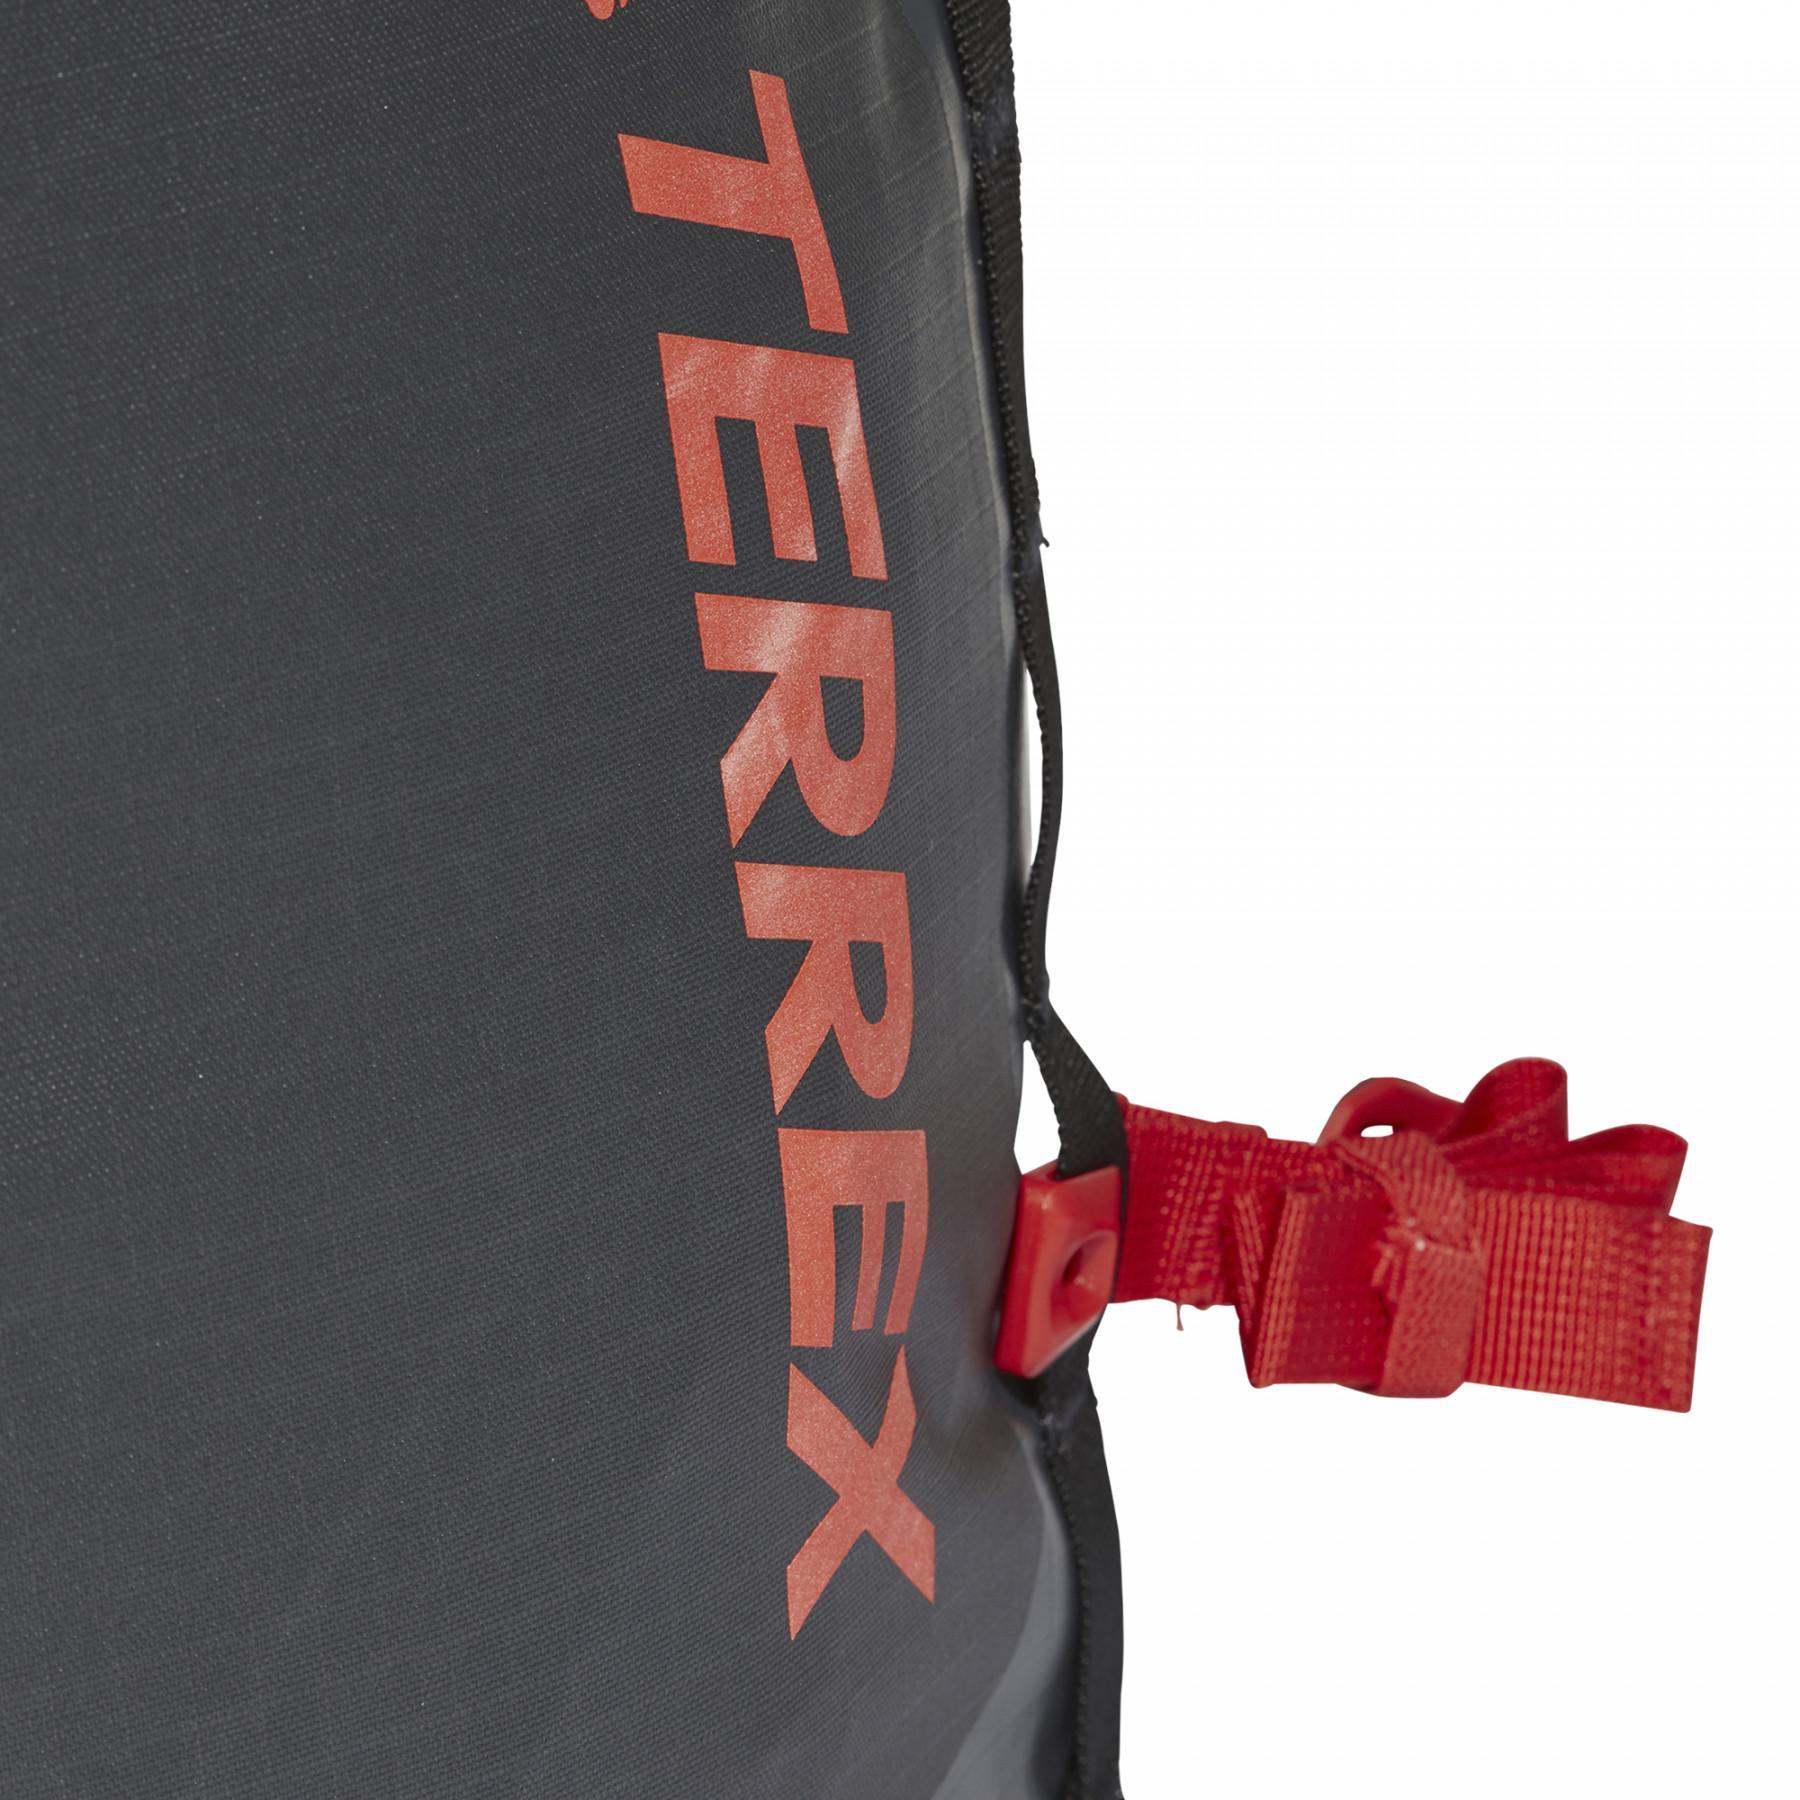 Backpack adidas Terrex Solo Lightweight